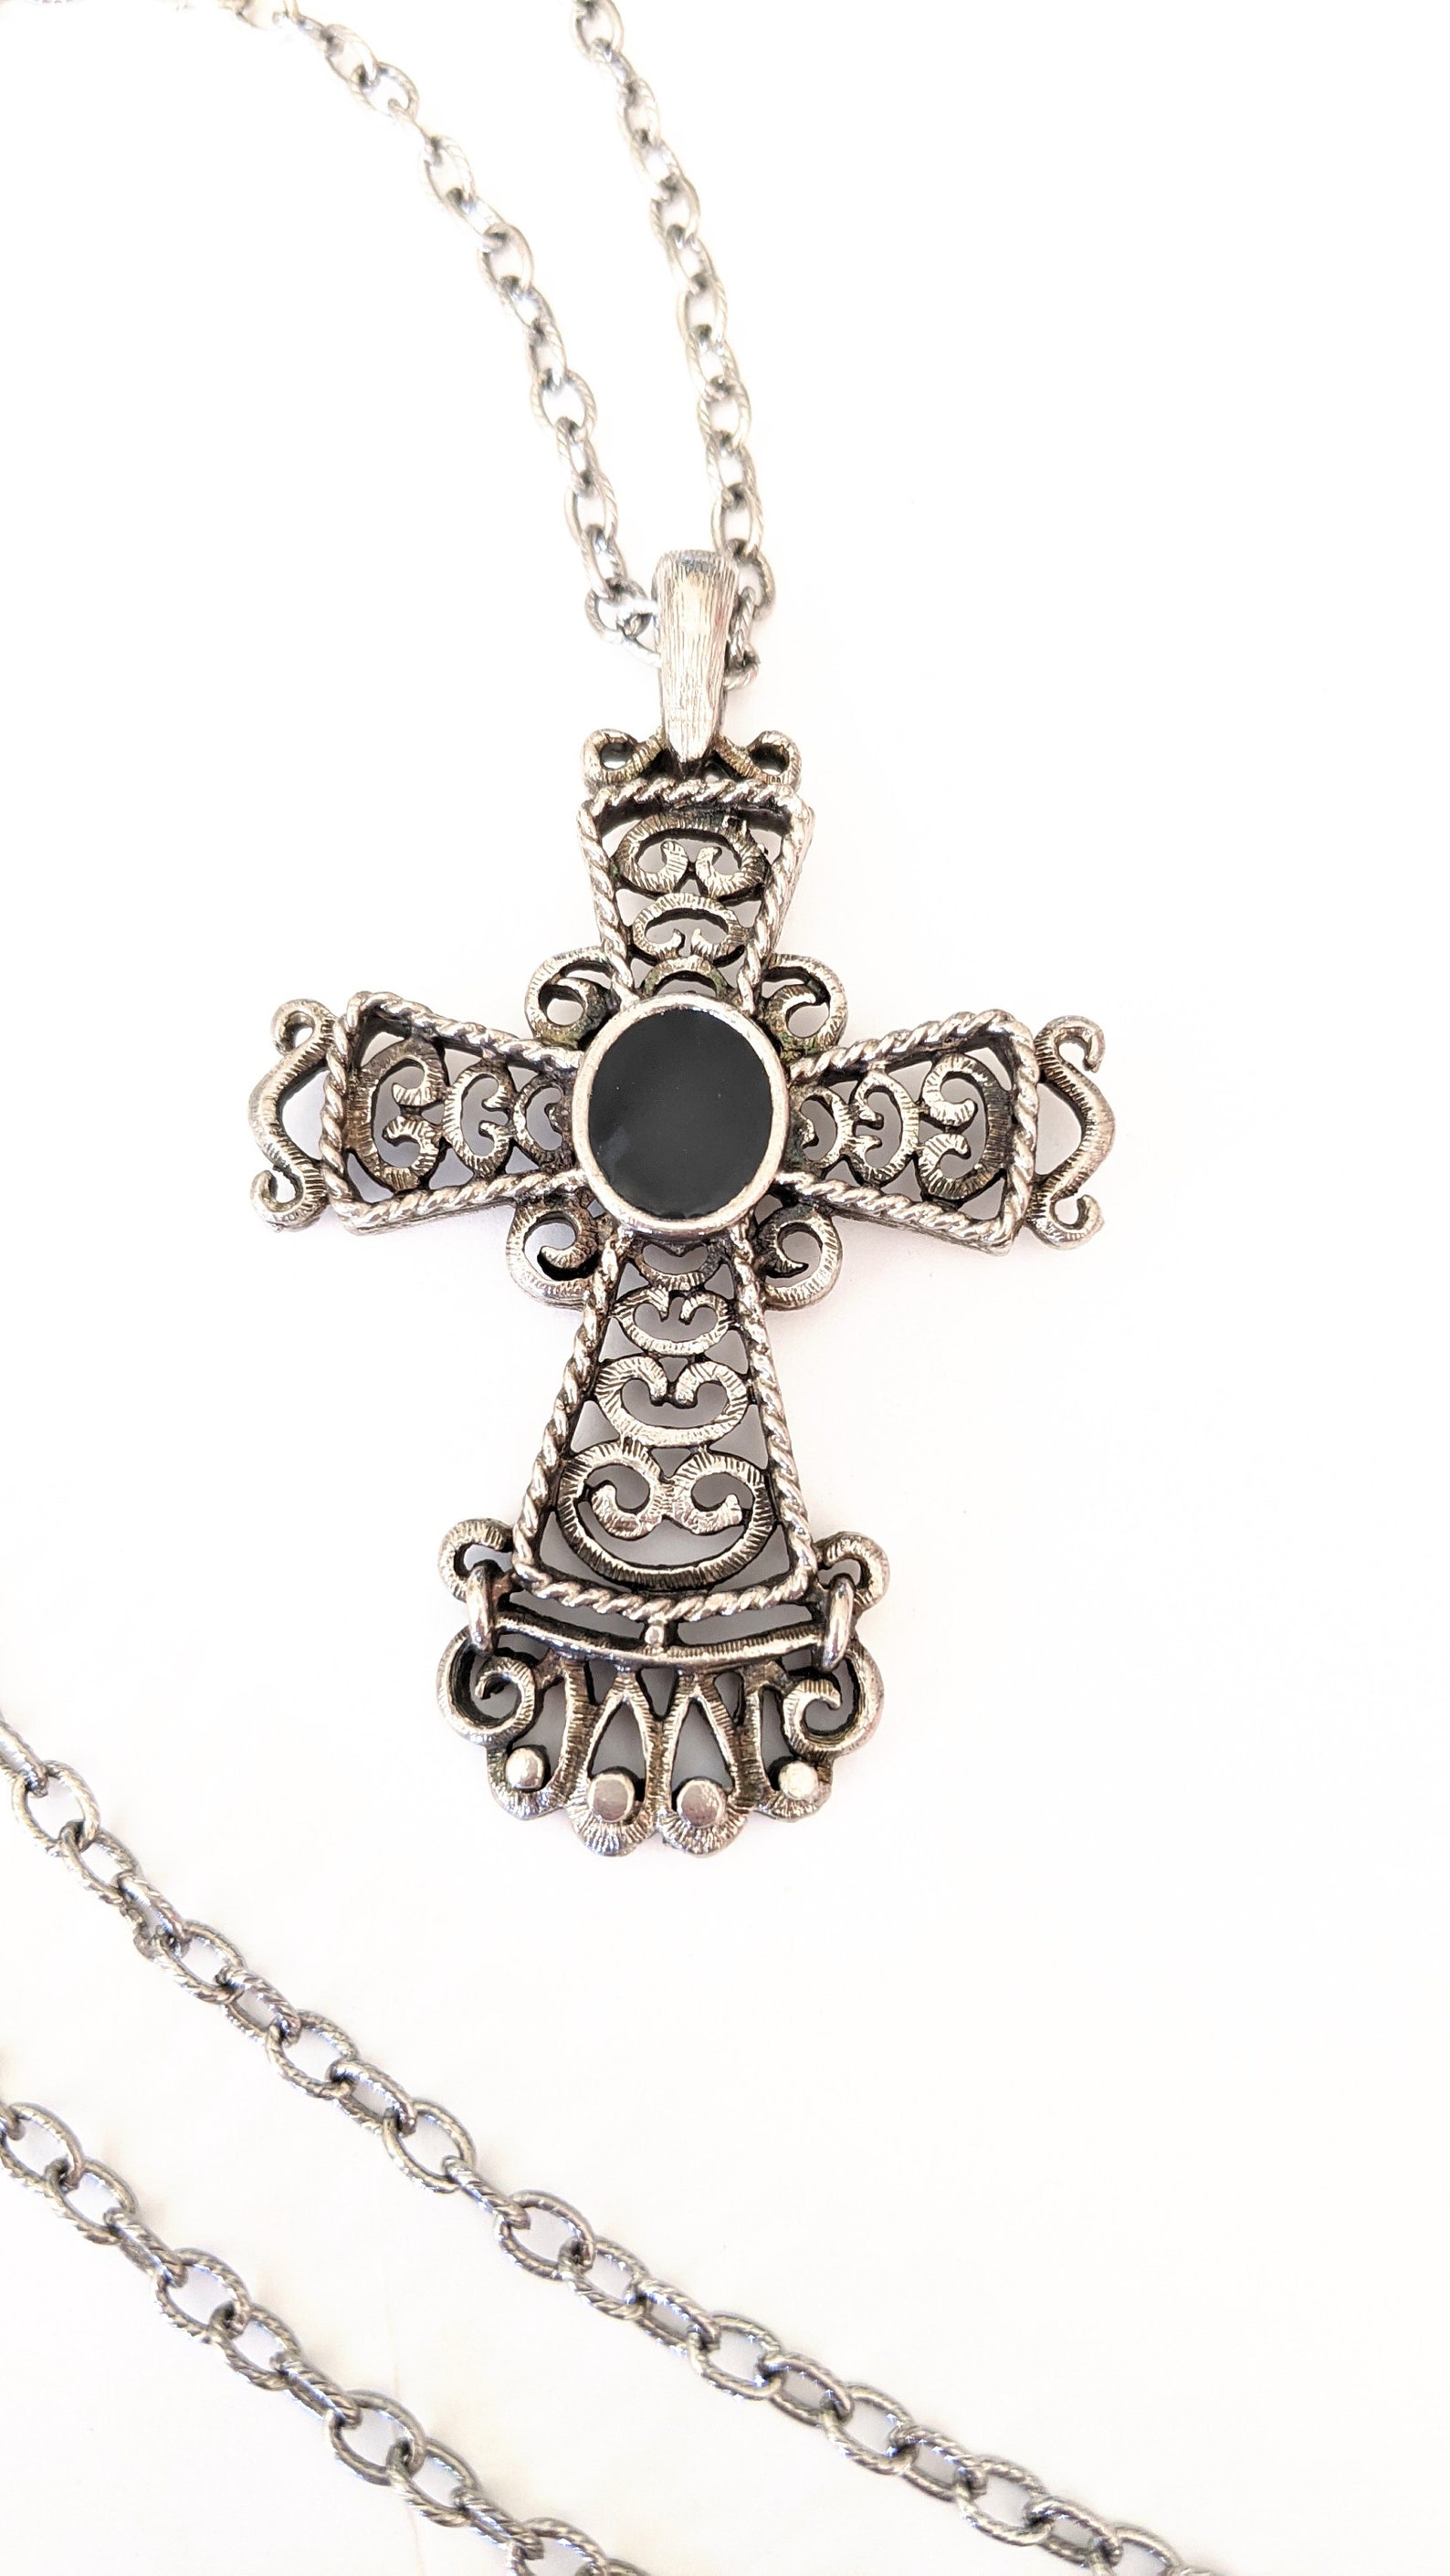 Vintage large gothic cross necklace pendant charm silver tone | Etsy